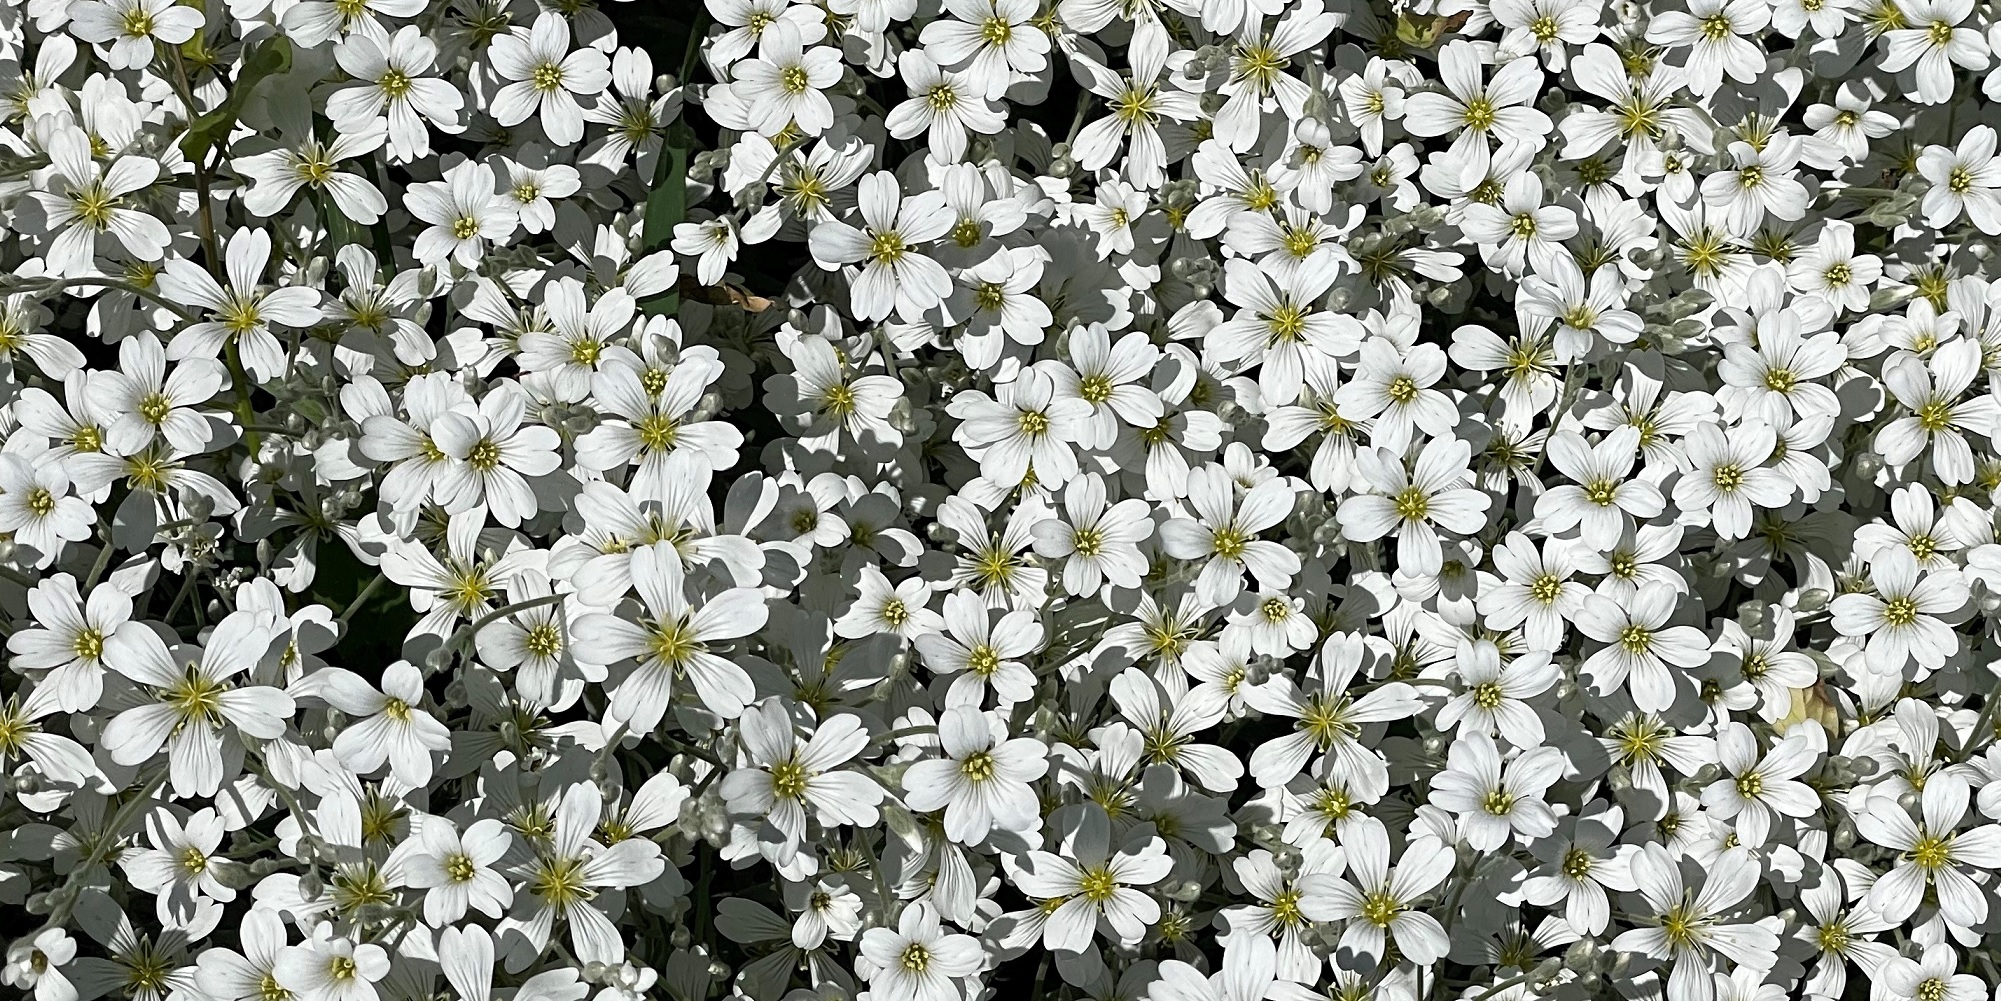 Lophora White flowers